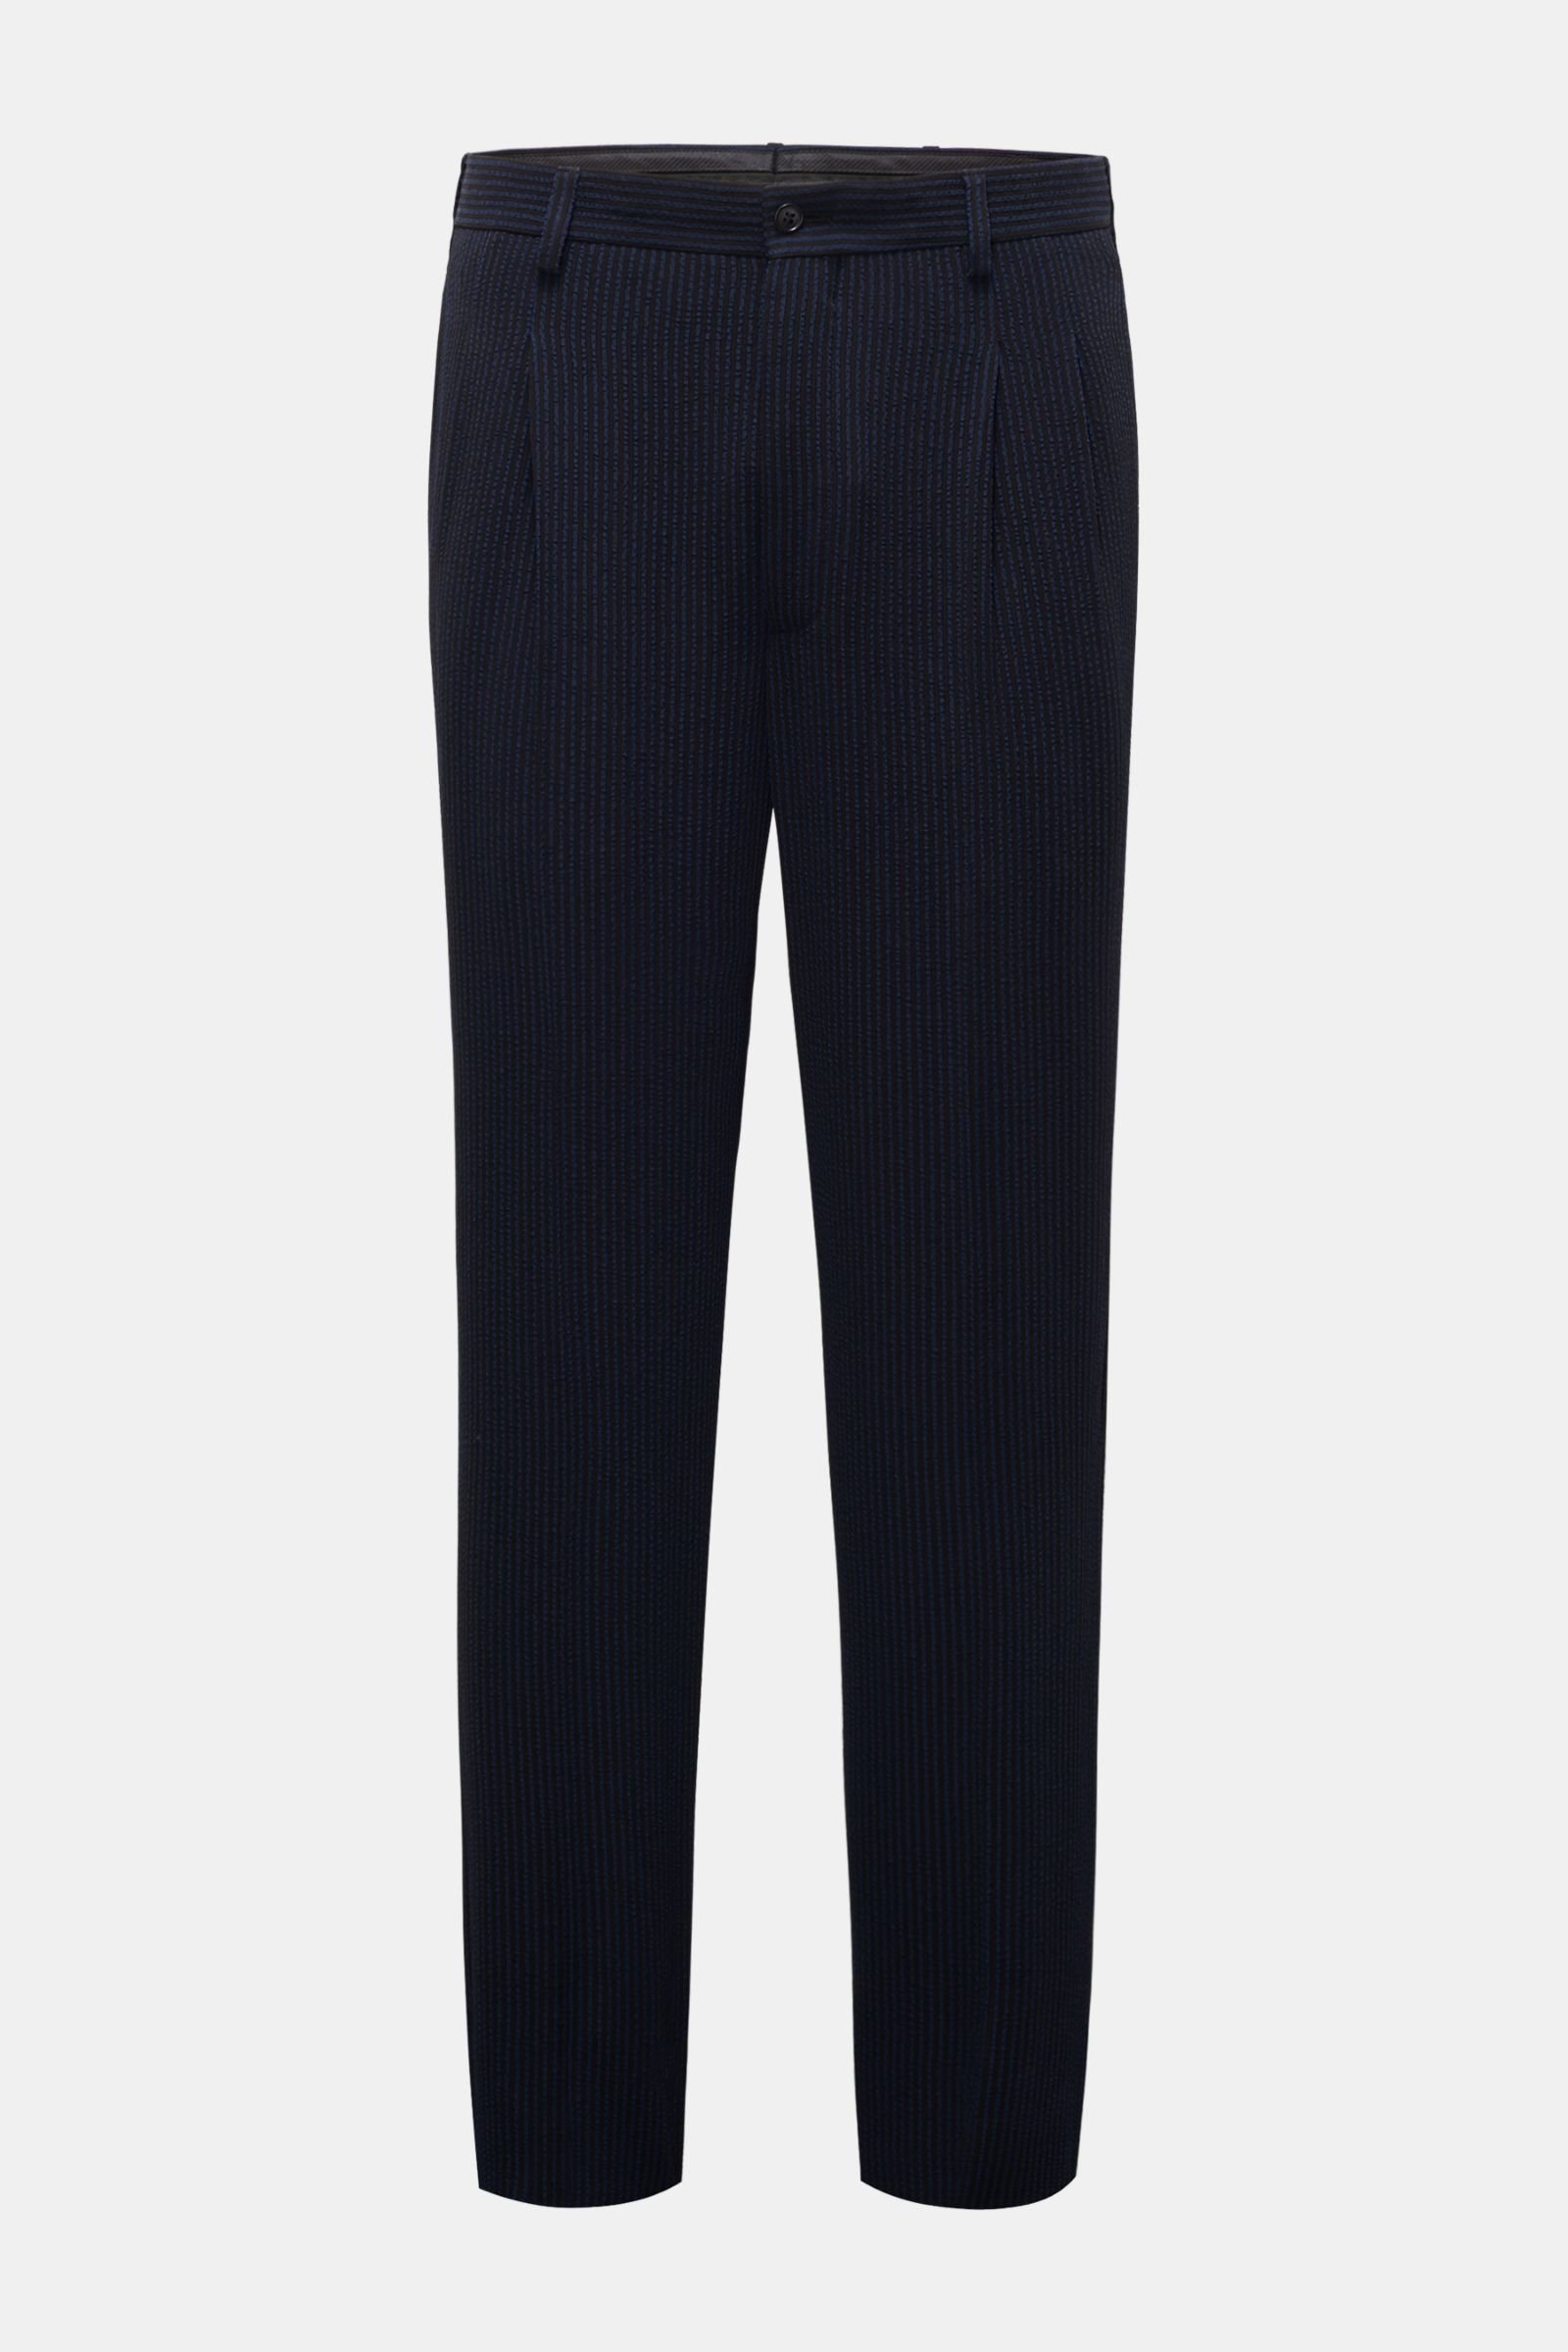 Seersucker trousers navy/black striped